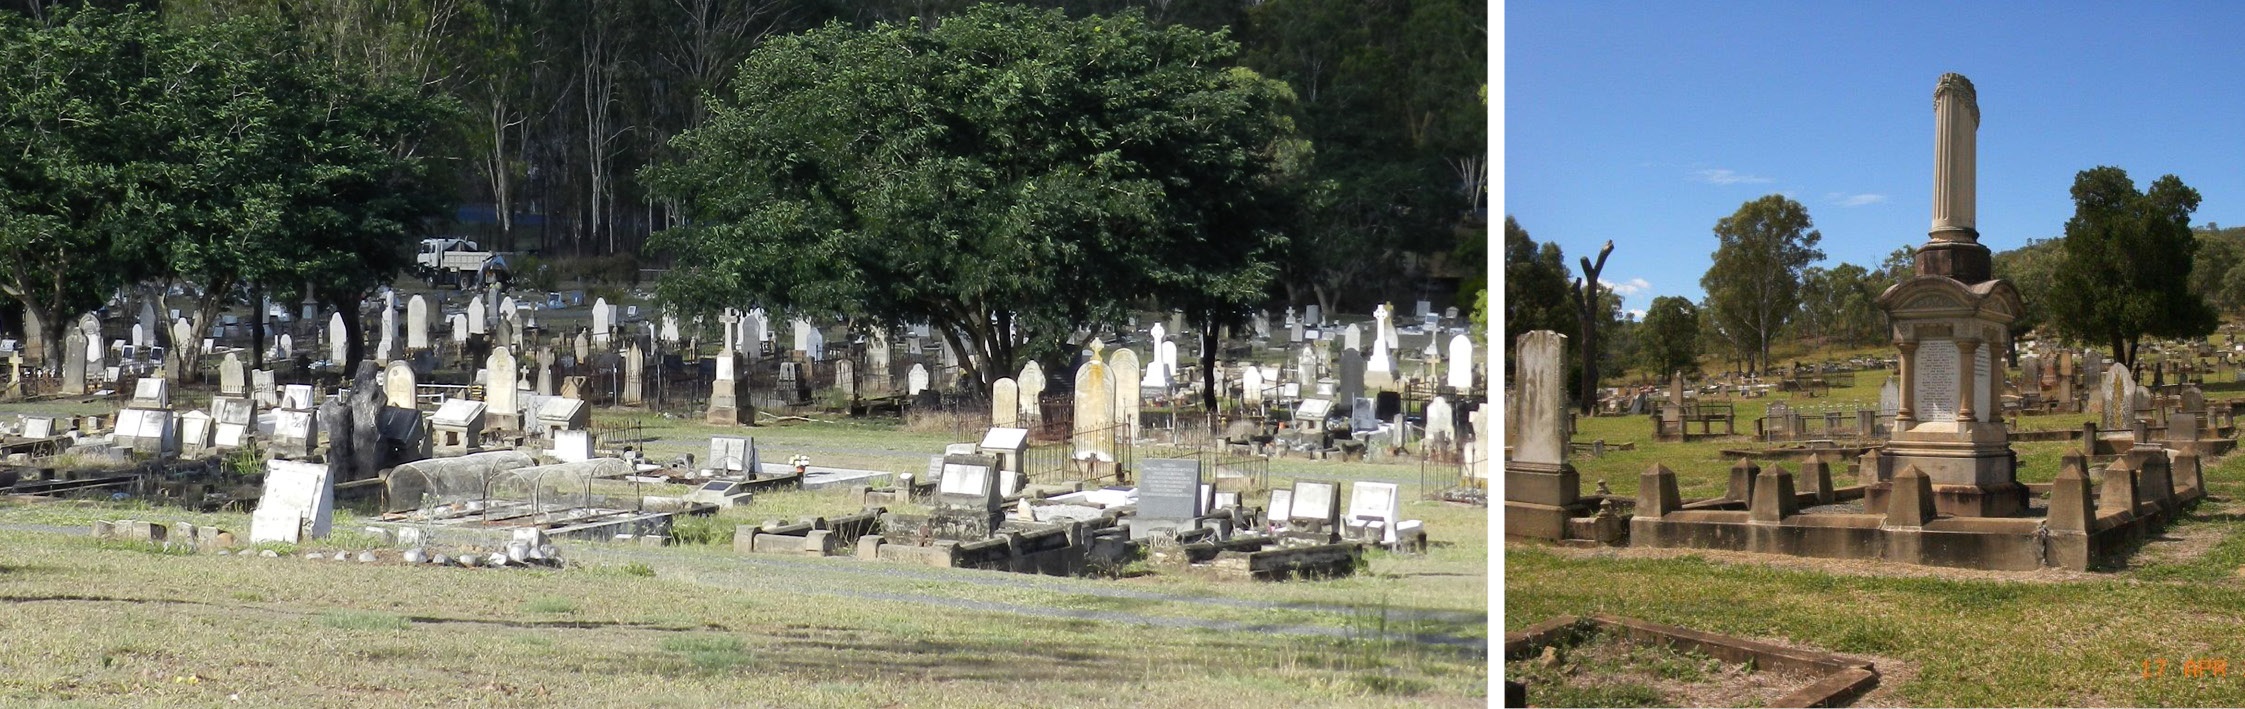 Mount Morgan Cemetery